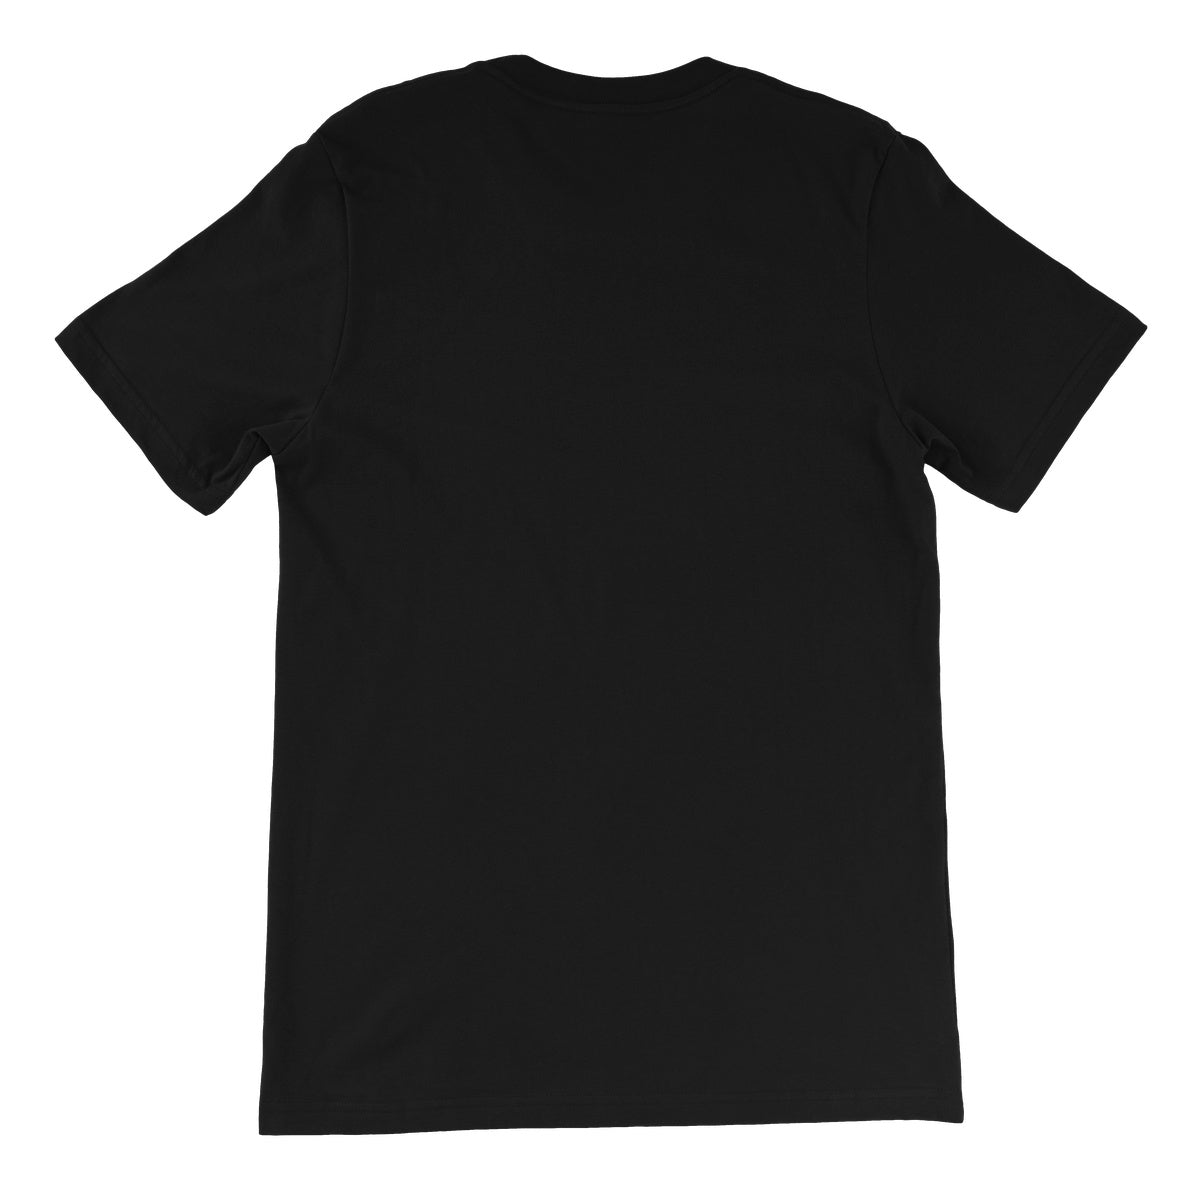 Bound For Glory 2020 - Kylie Rae Unisex Short Sleeve T-Shirt